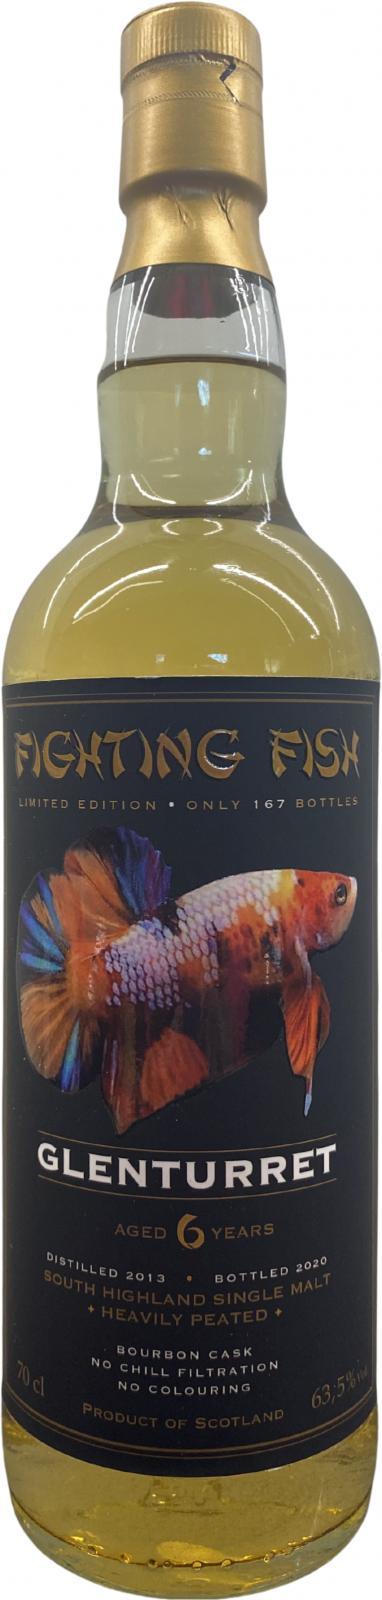 Glenturret 2013 JW Fighting Fish 6 Year Old (2020) Release Scotch Whisky | 700ML